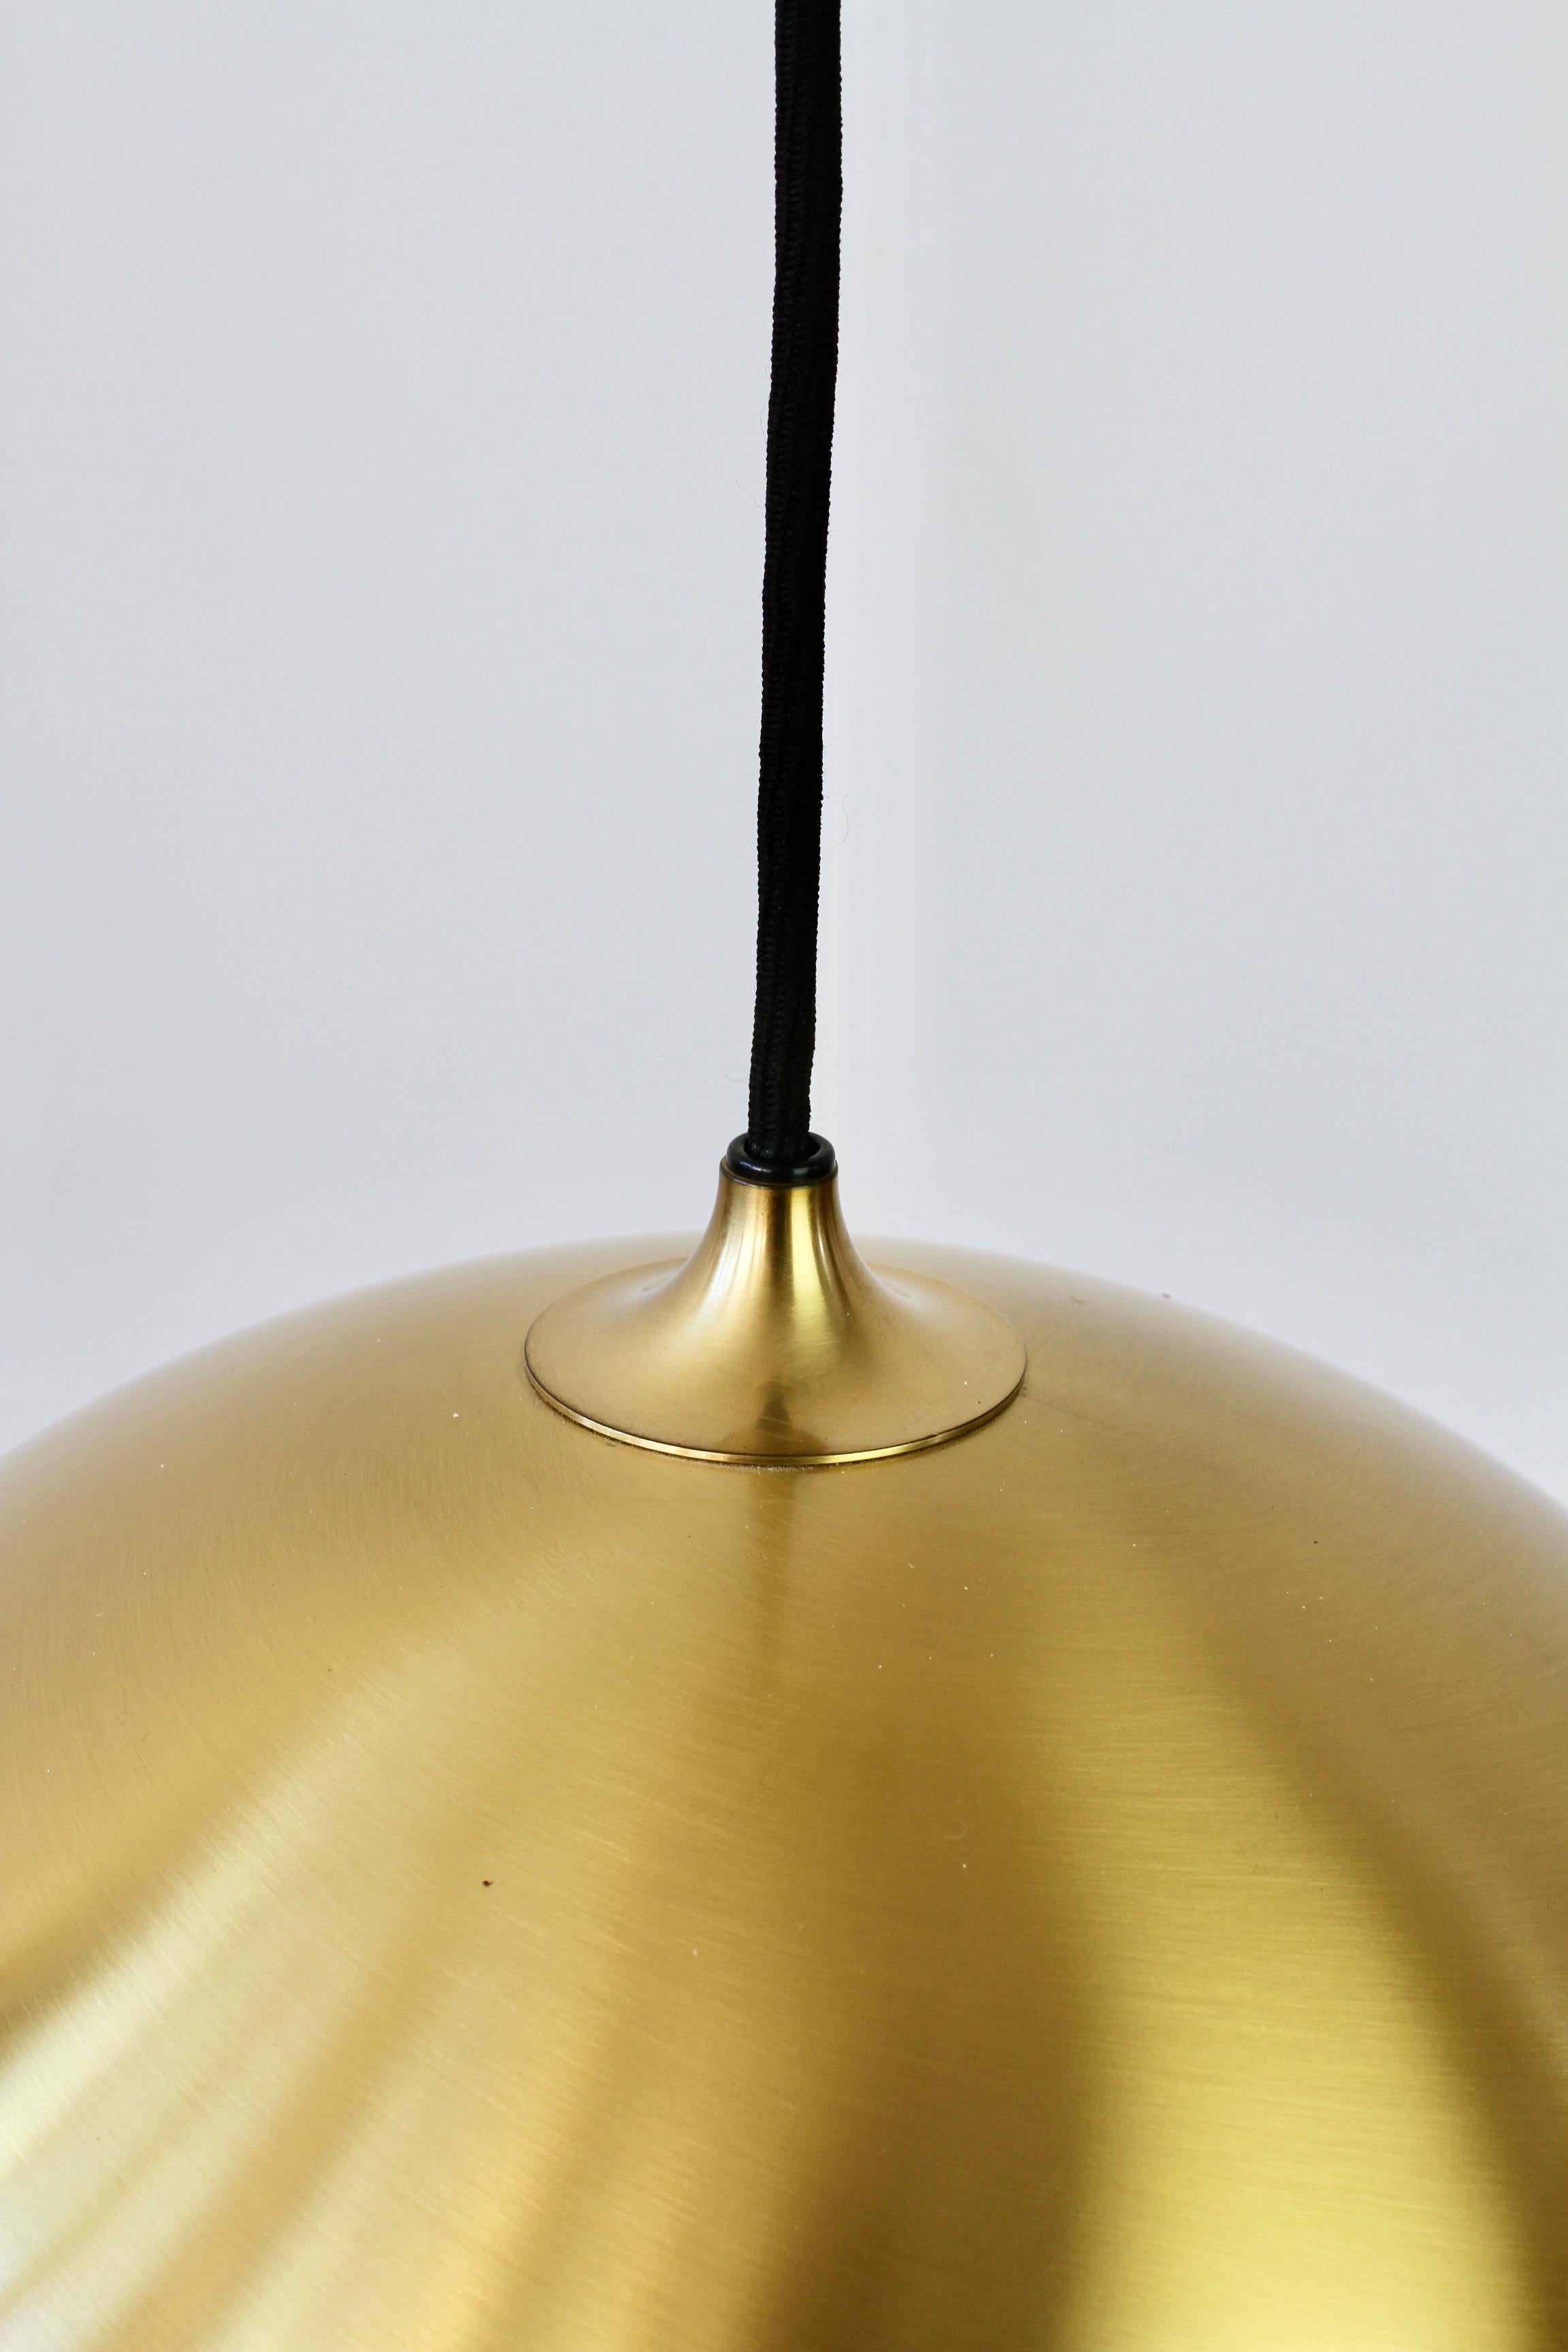 Florian Schulz Vintage Modernist Brass Counterbalanced Adjustable Pendant Light For Sale 1